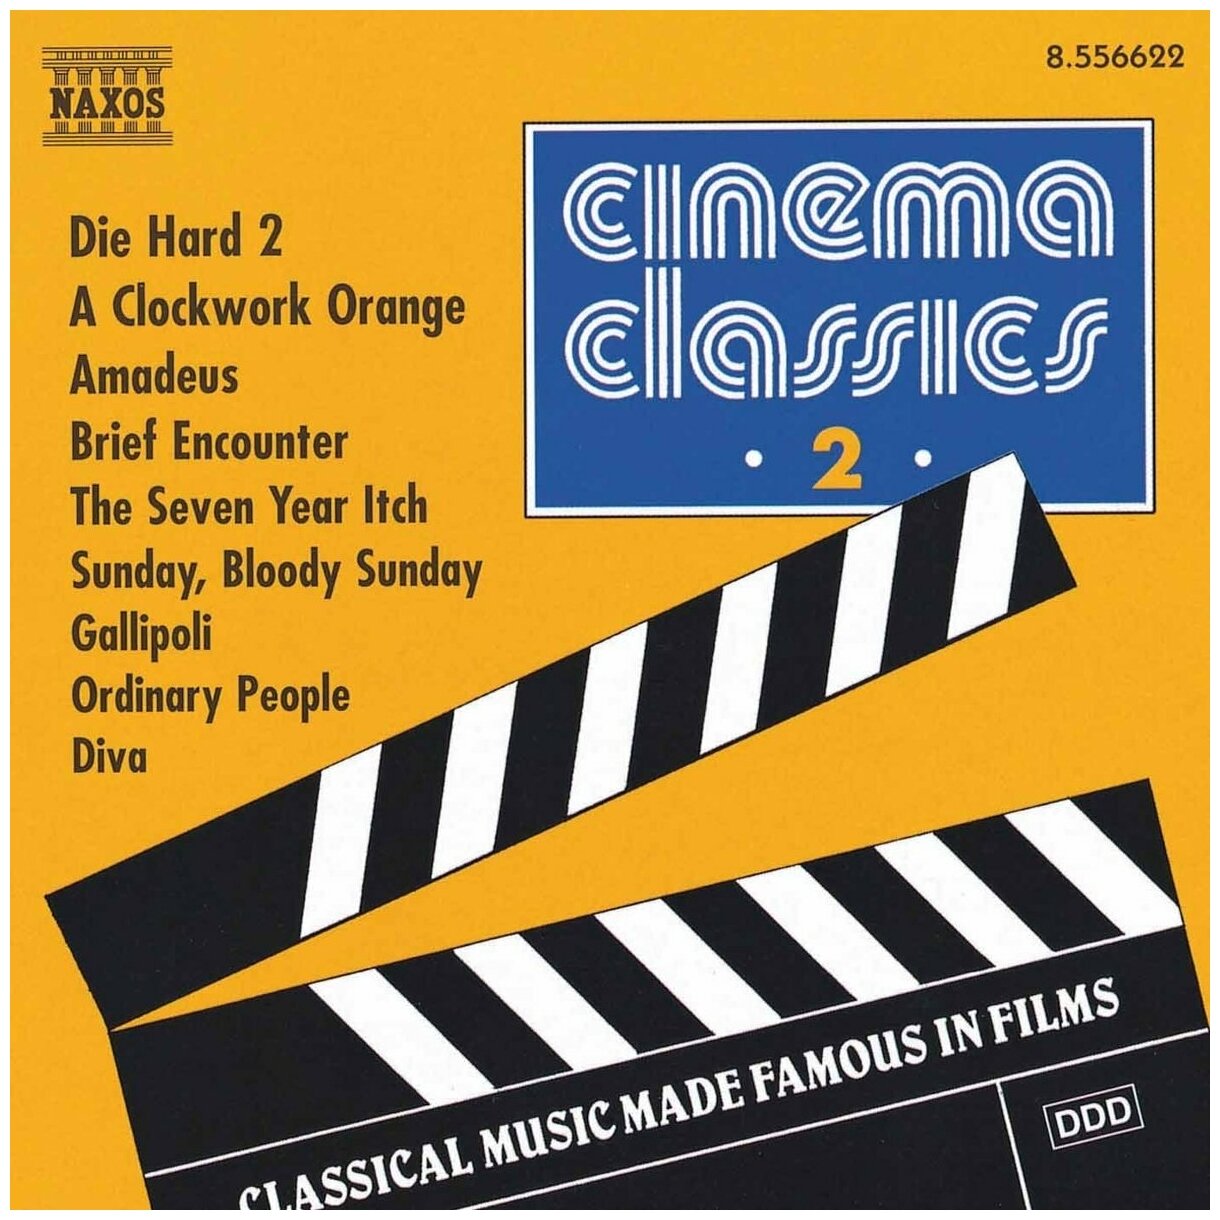 V/A Cinema Classics 2*Clockwork Orange Diva ordinary People Amadeus- Die Hard 2 Naxos CD Deu ( Компакт-диск 1шт)